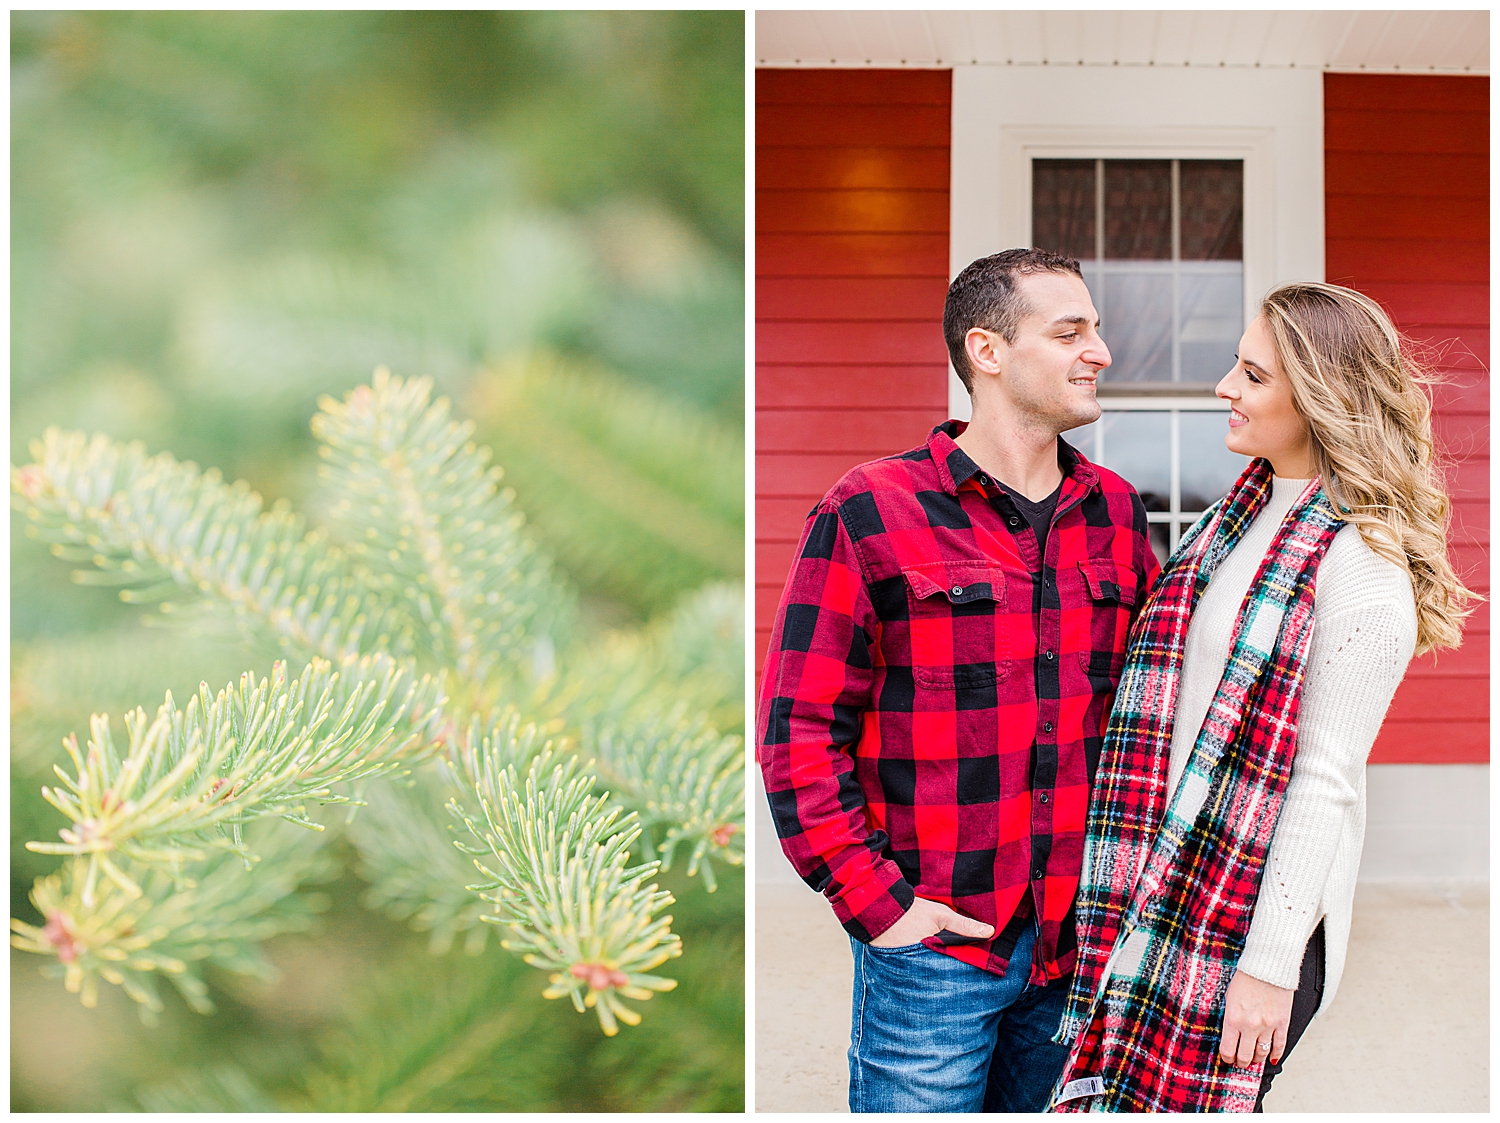 River_Run_Christmas_Tree_Farm_Mantua_Ohio_Engagement_Portraits_Kate_Mannella_Photography